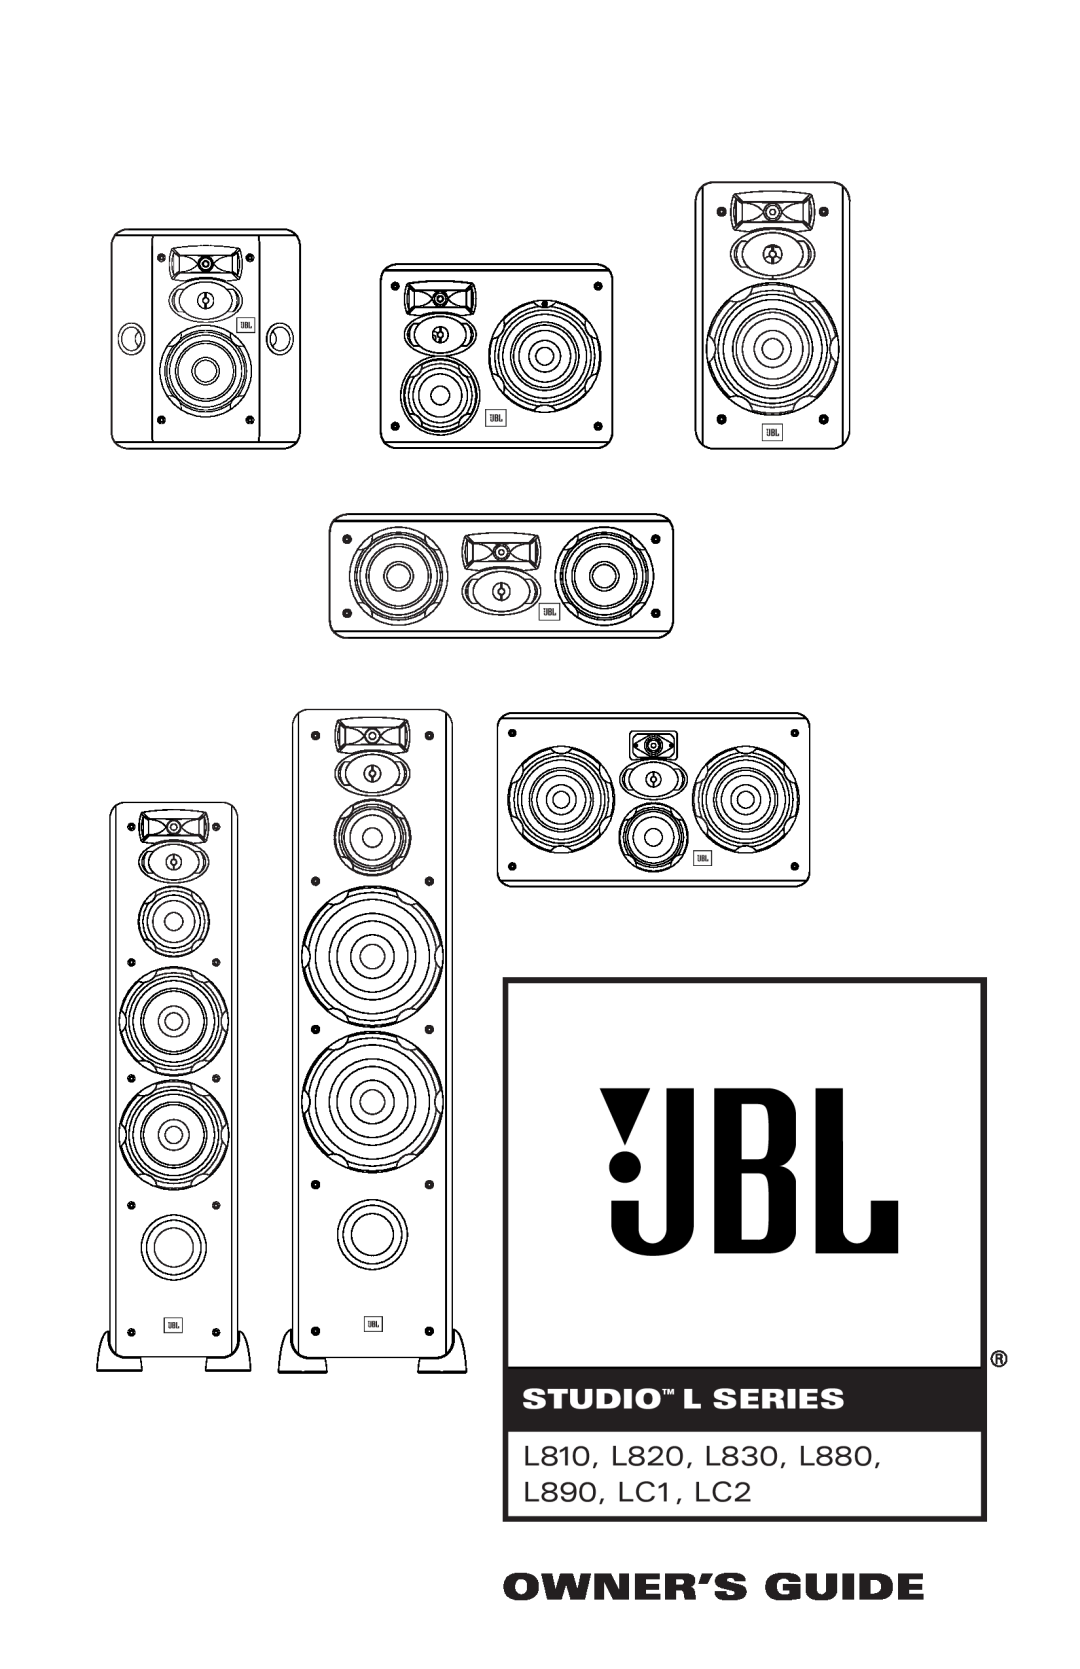 JBL manual Speaker Placement, MODELS L880, L890, MODEL L830, MODEL LC1, Owner’S Guide, Studio L Series 